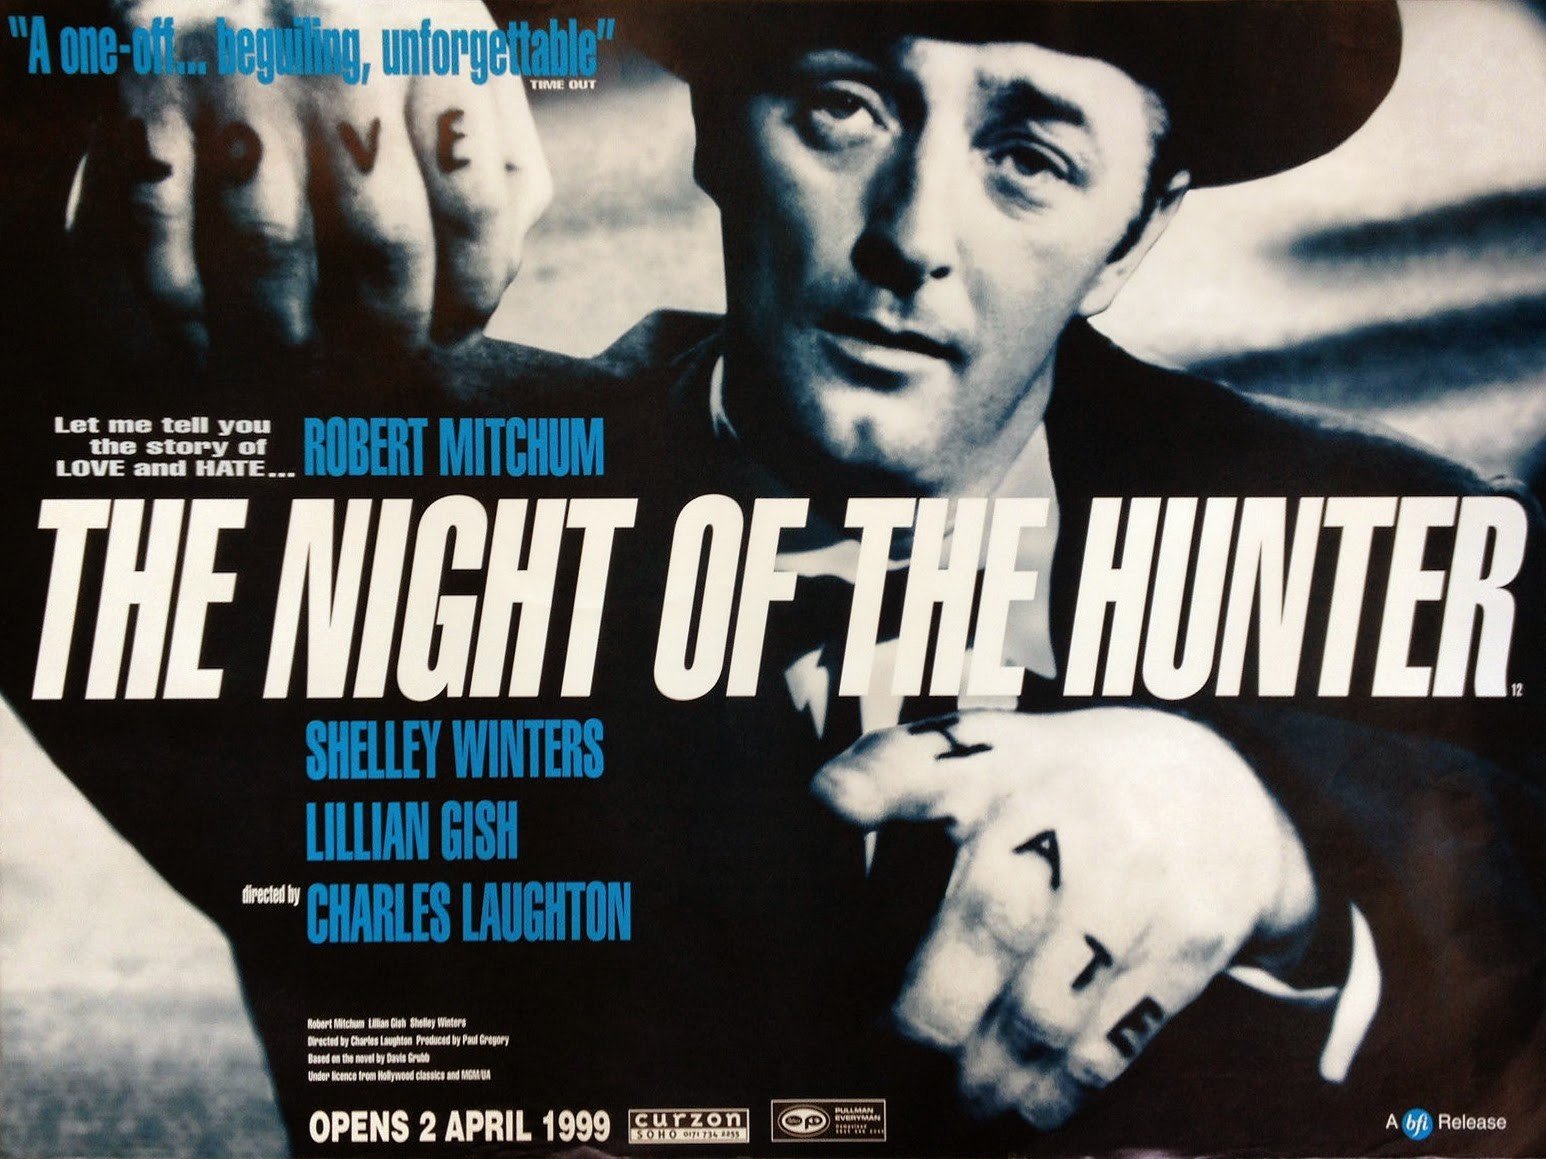 Robert Mitchum, The Night of the Hunter, Film posters, Tattoo, Charles Laughton Wallpaper